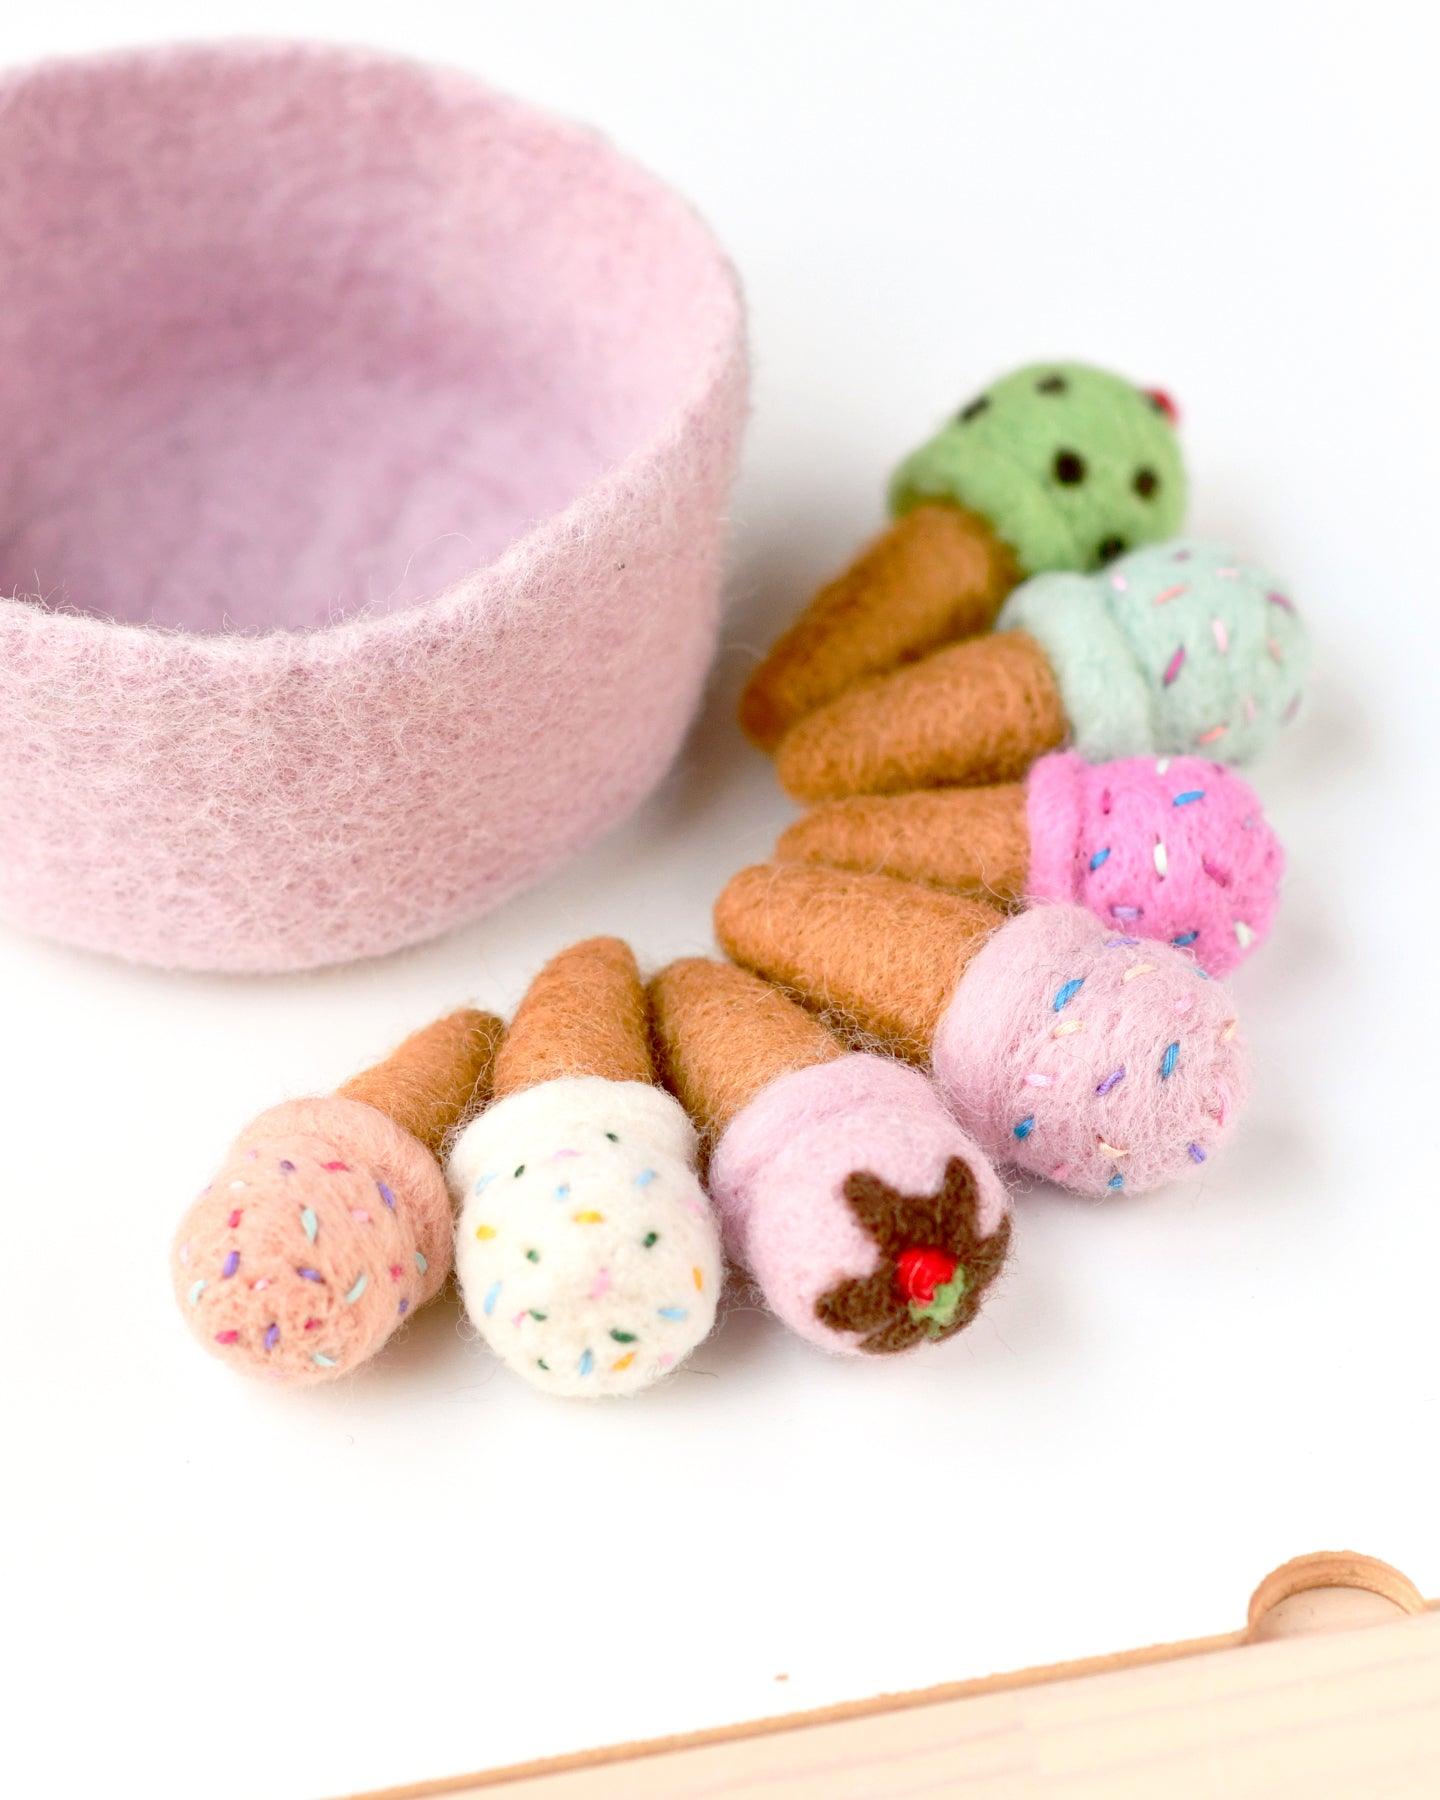 Felt Ice Creams - Cotton Candy Flavour with Sprinkles - Tara Treasures